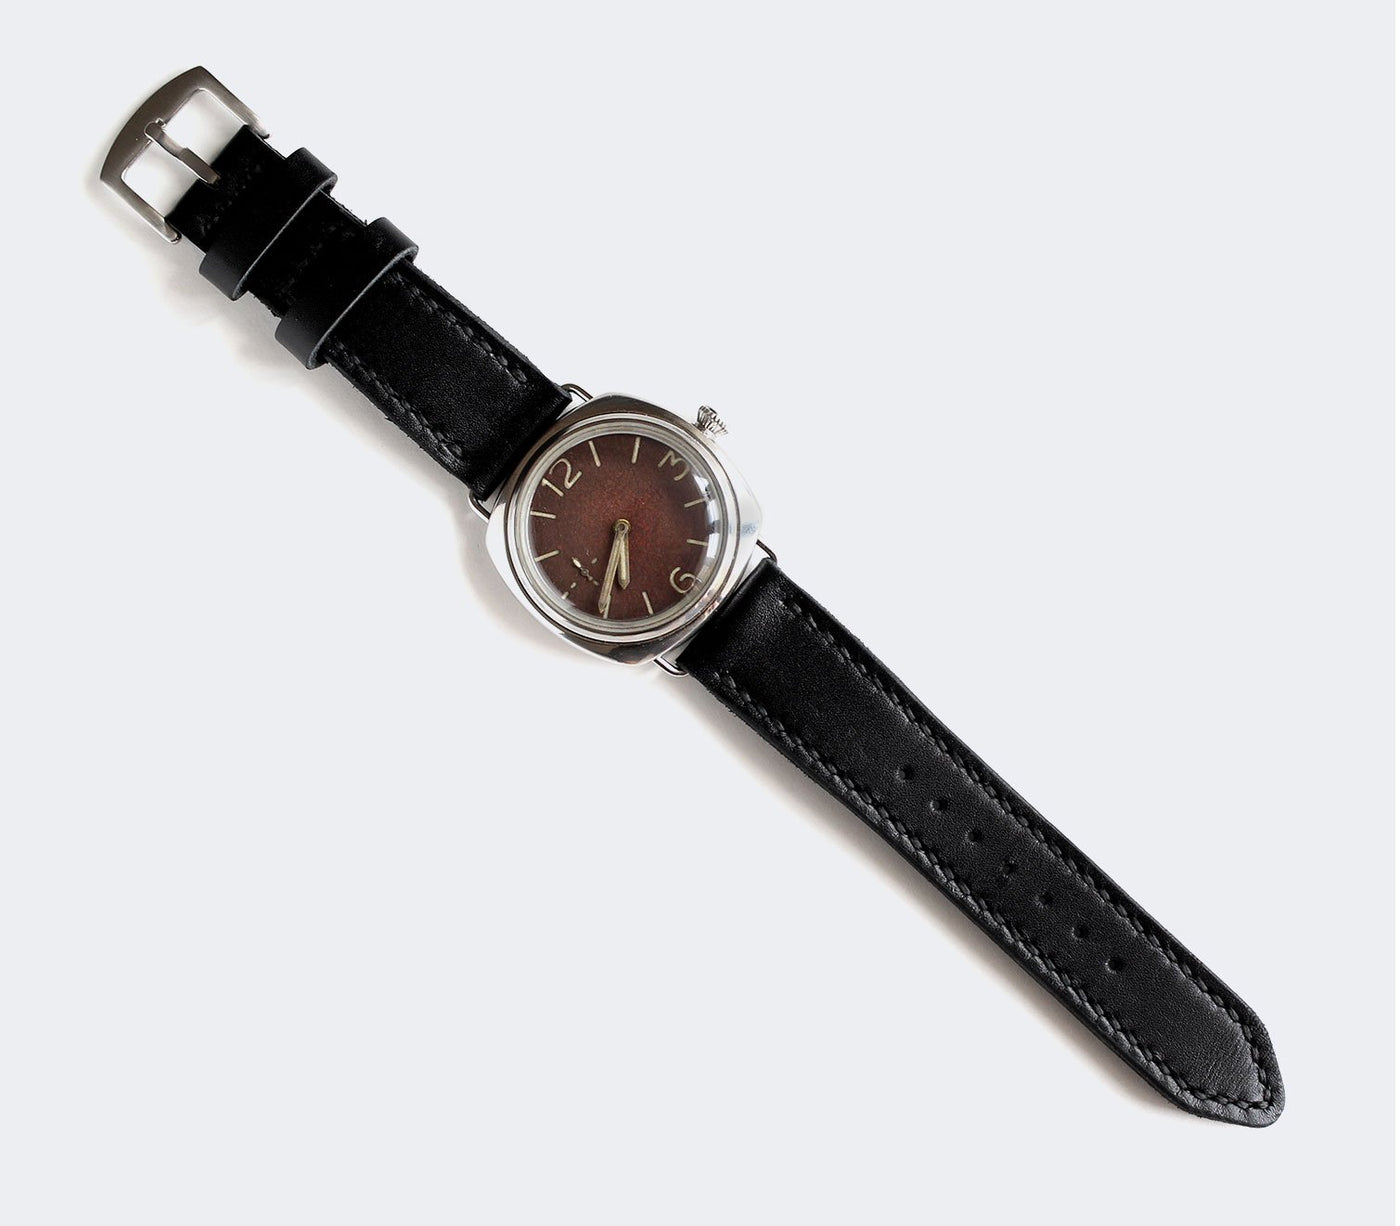 Custom Made Leather Watch Strap - Black